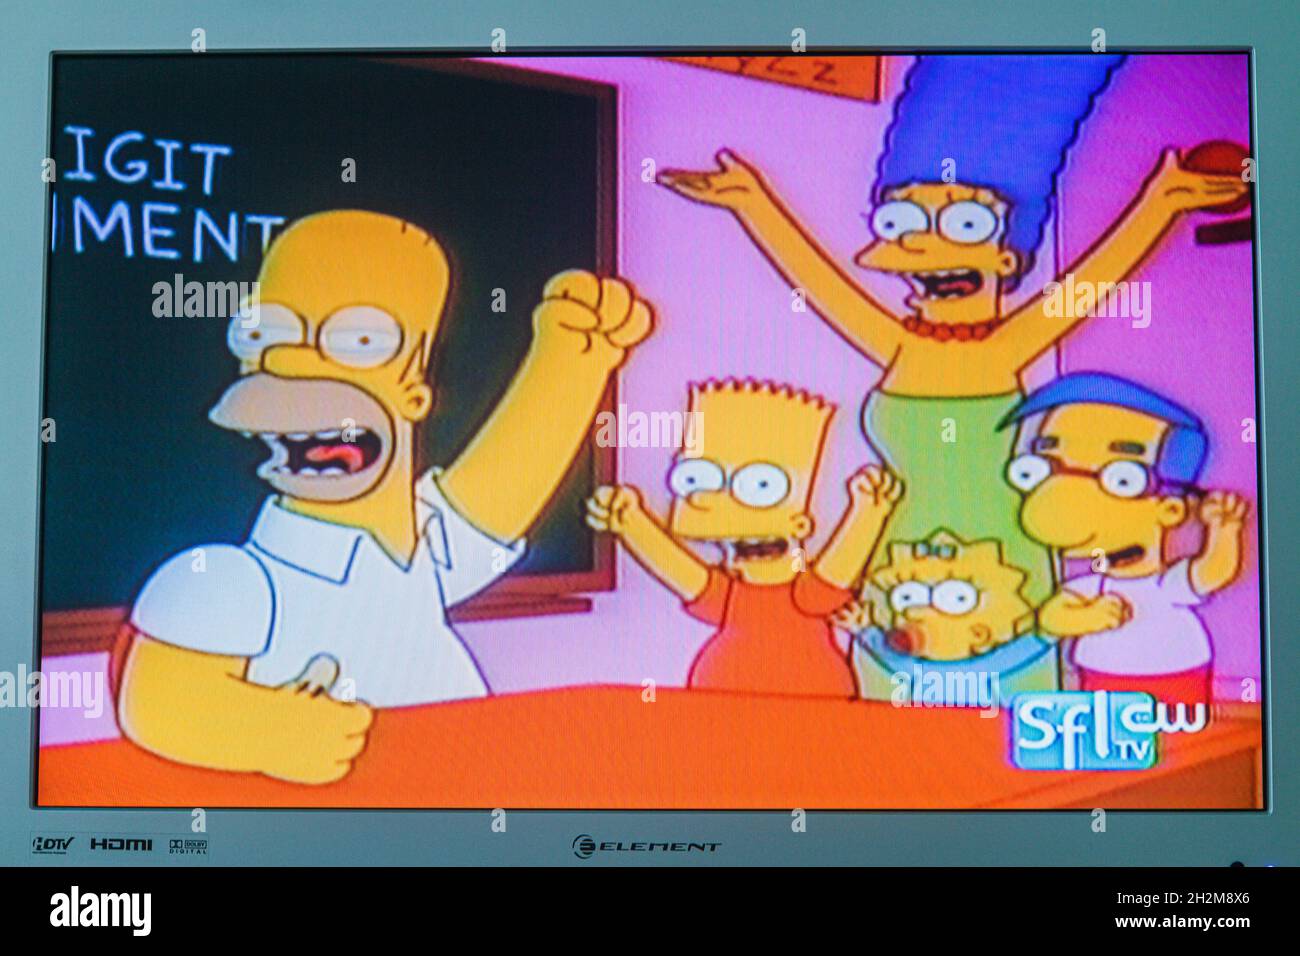 Televisión pantalla plana de televisión pantalla plana monitor HDTV, Los Simpsons animada sitcom caricatura Homer Bart Marge Maggie Milhouse, comedia Foto de stock